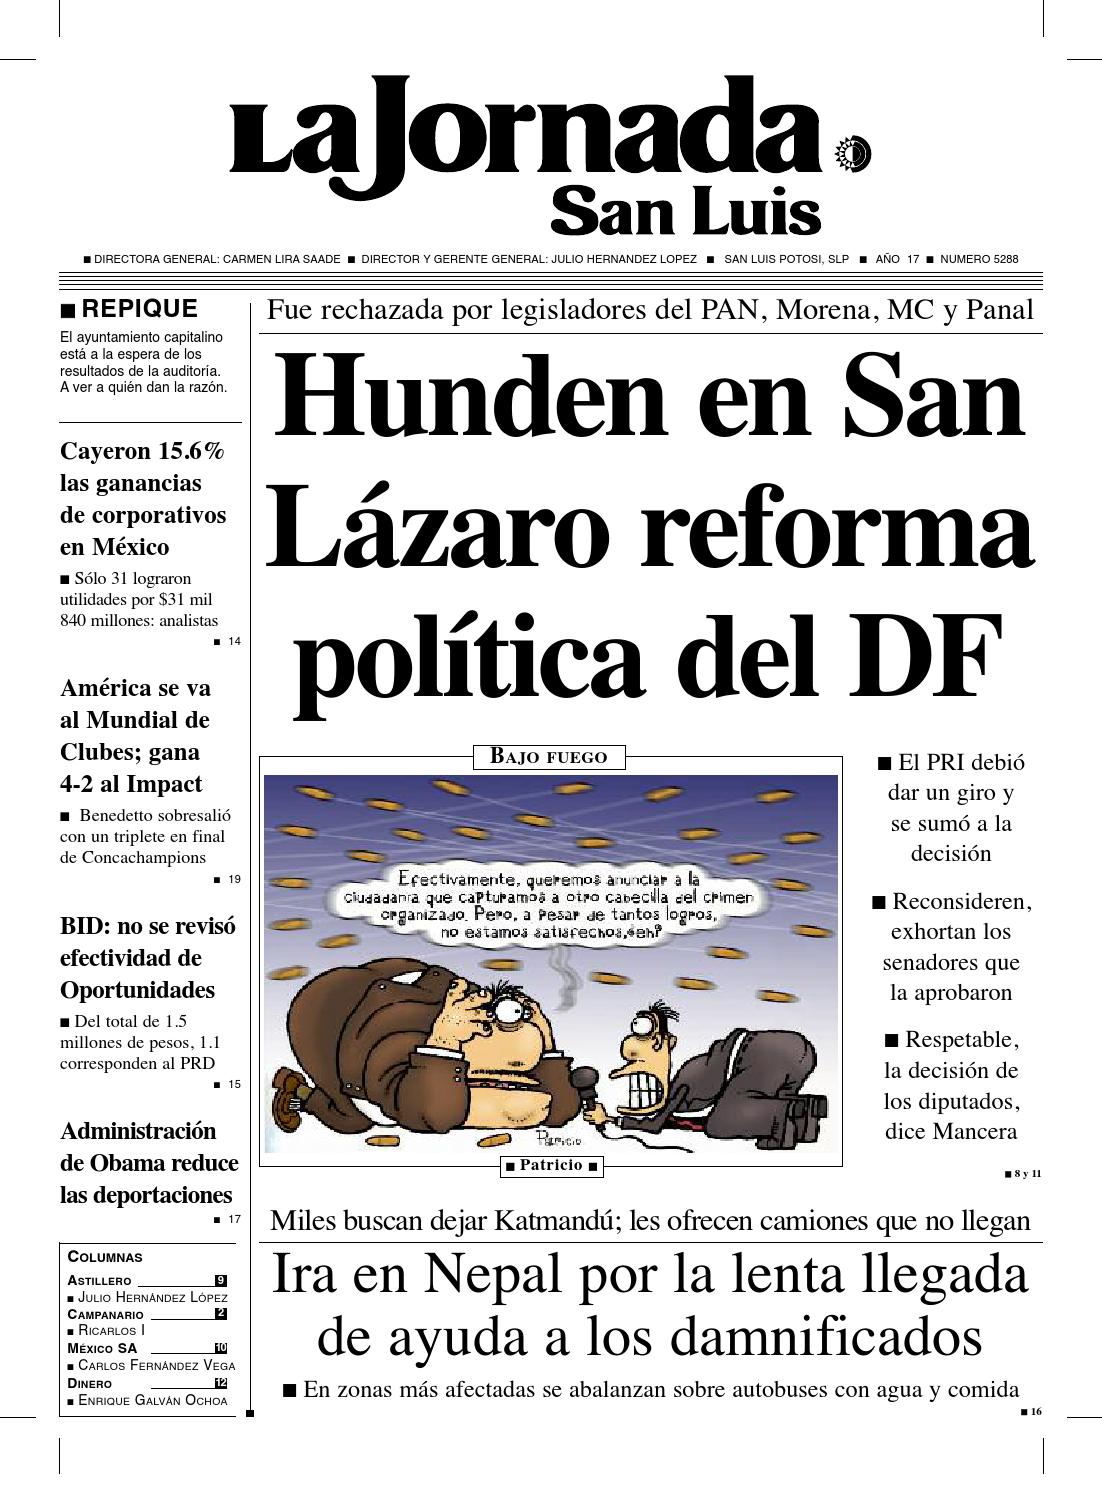 La Jornada, San Luis Potosí